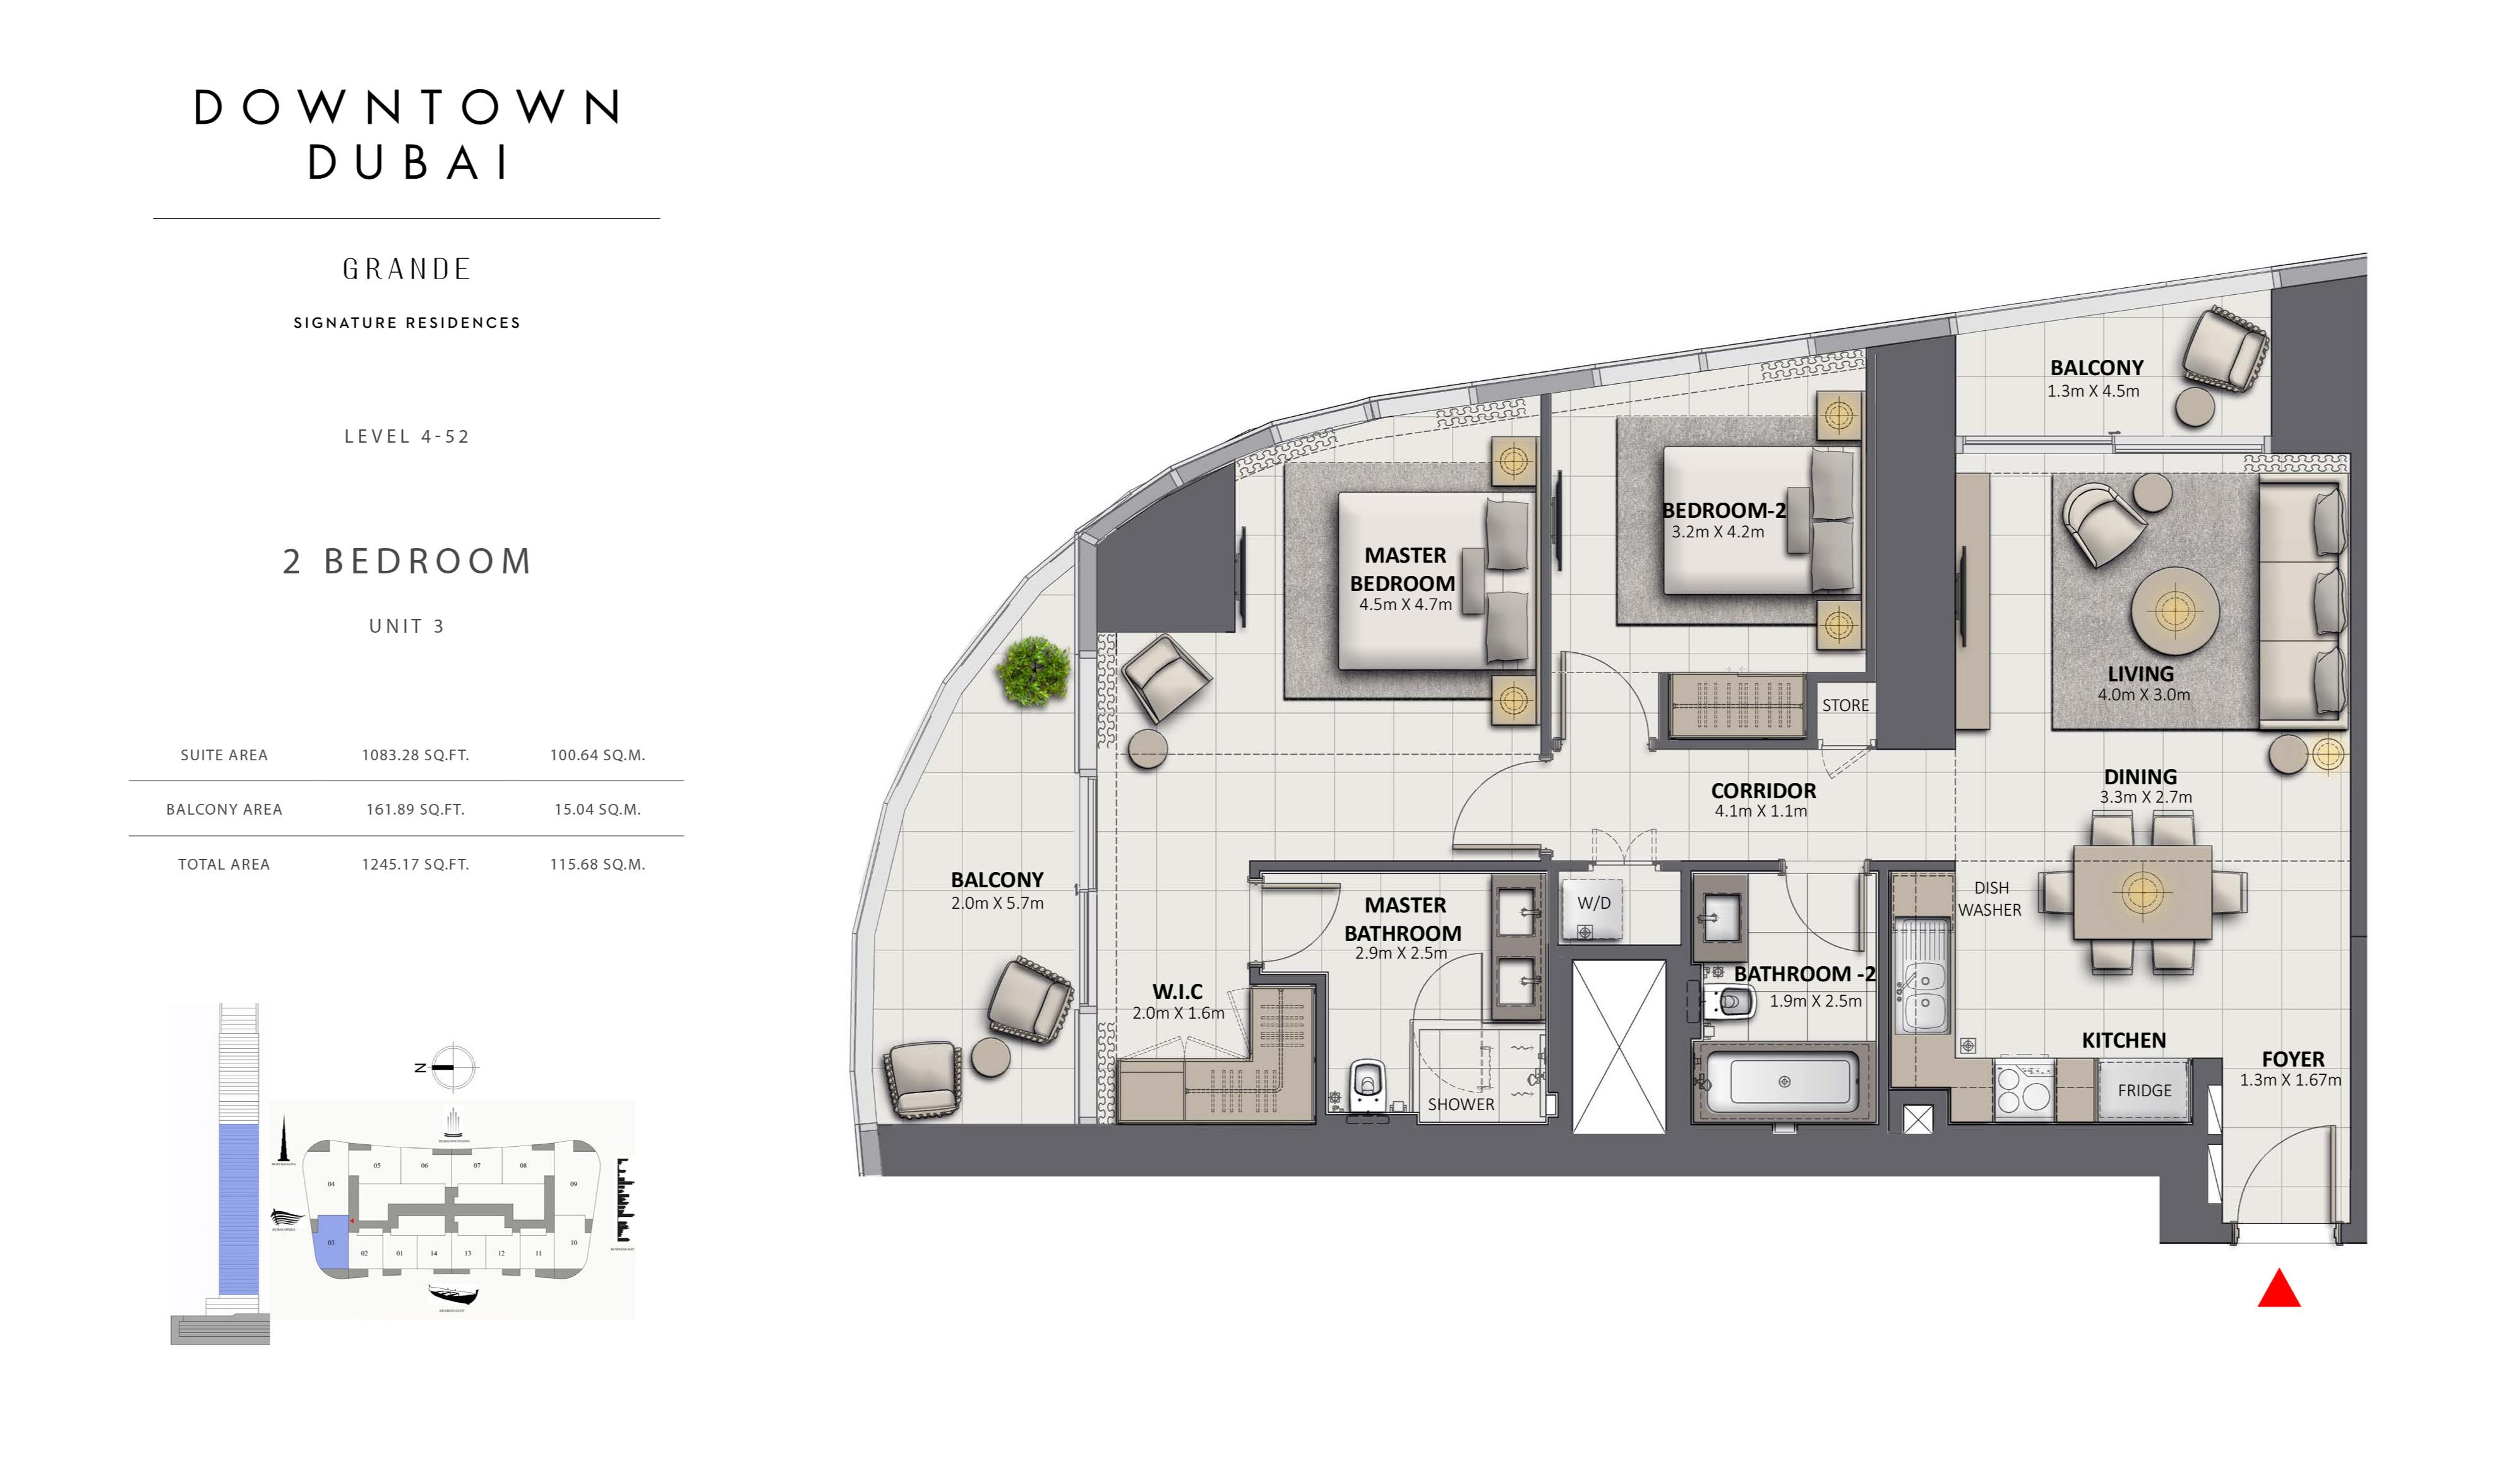 Floor Plan - Emaar Burj Vista Apartments - Downtown Dubai